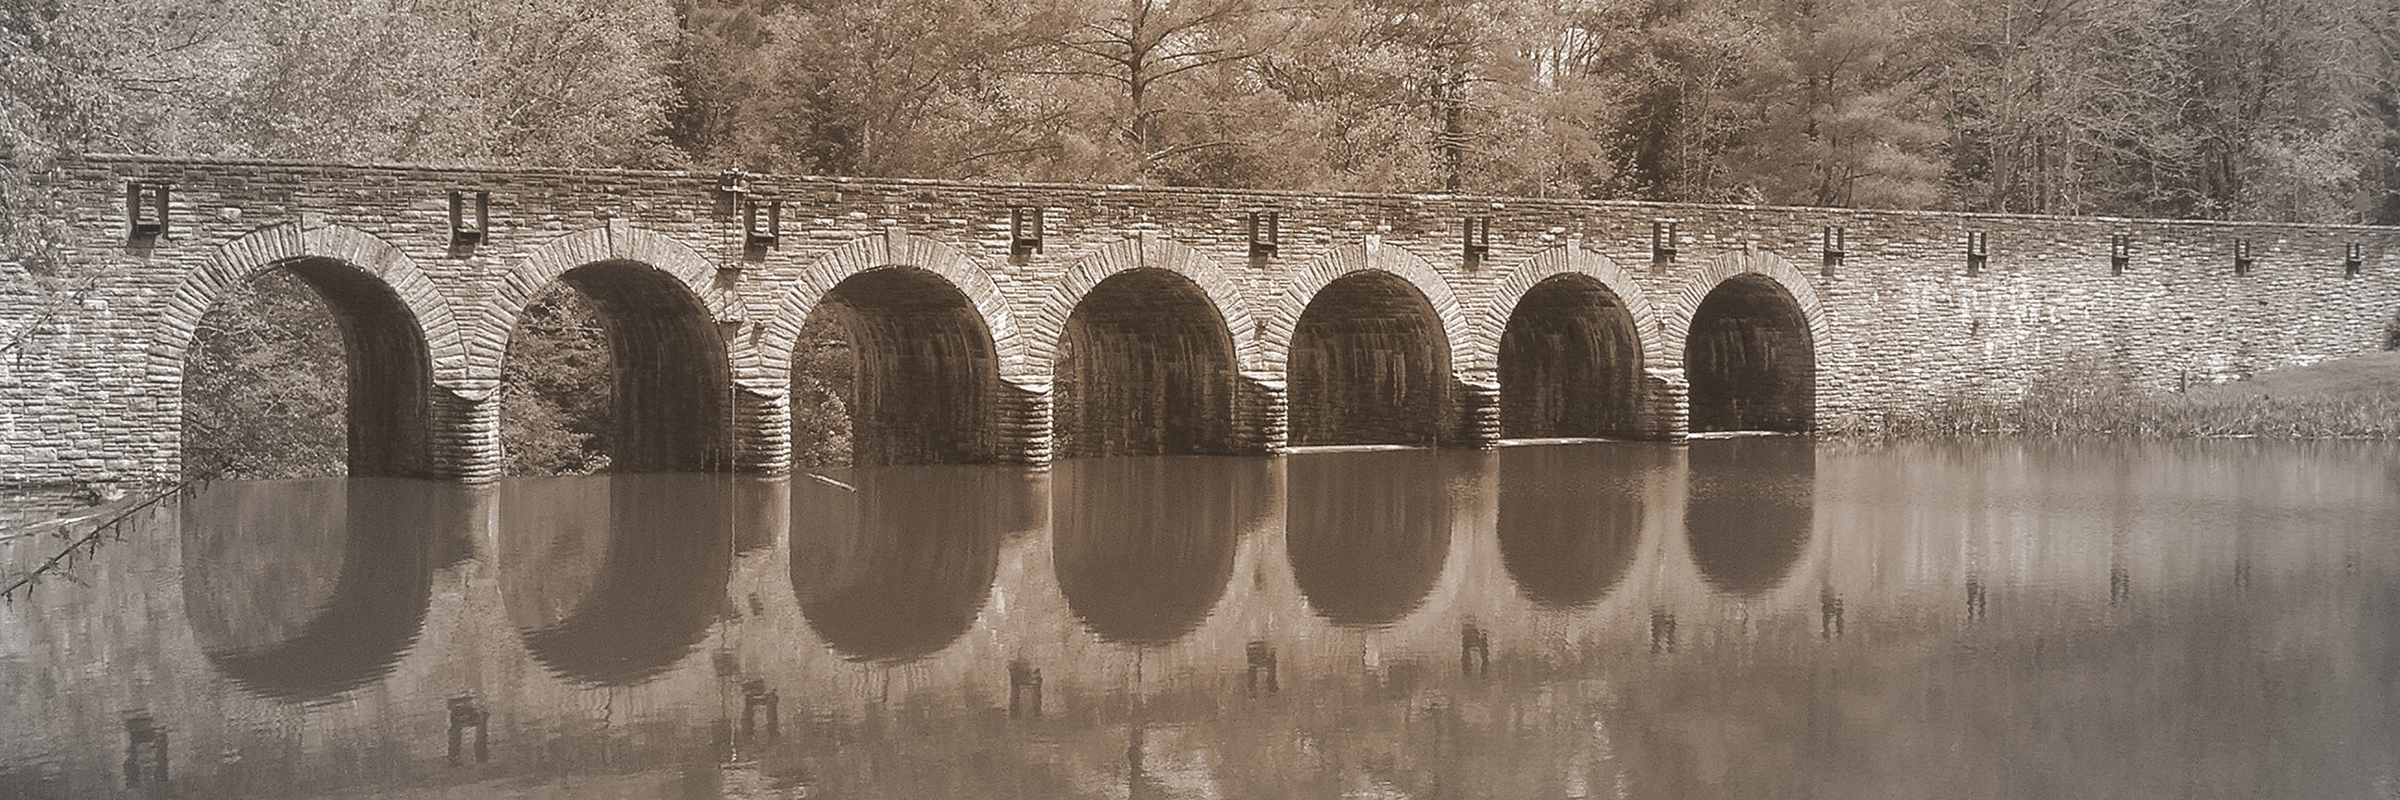 country-bridge-photography-slider